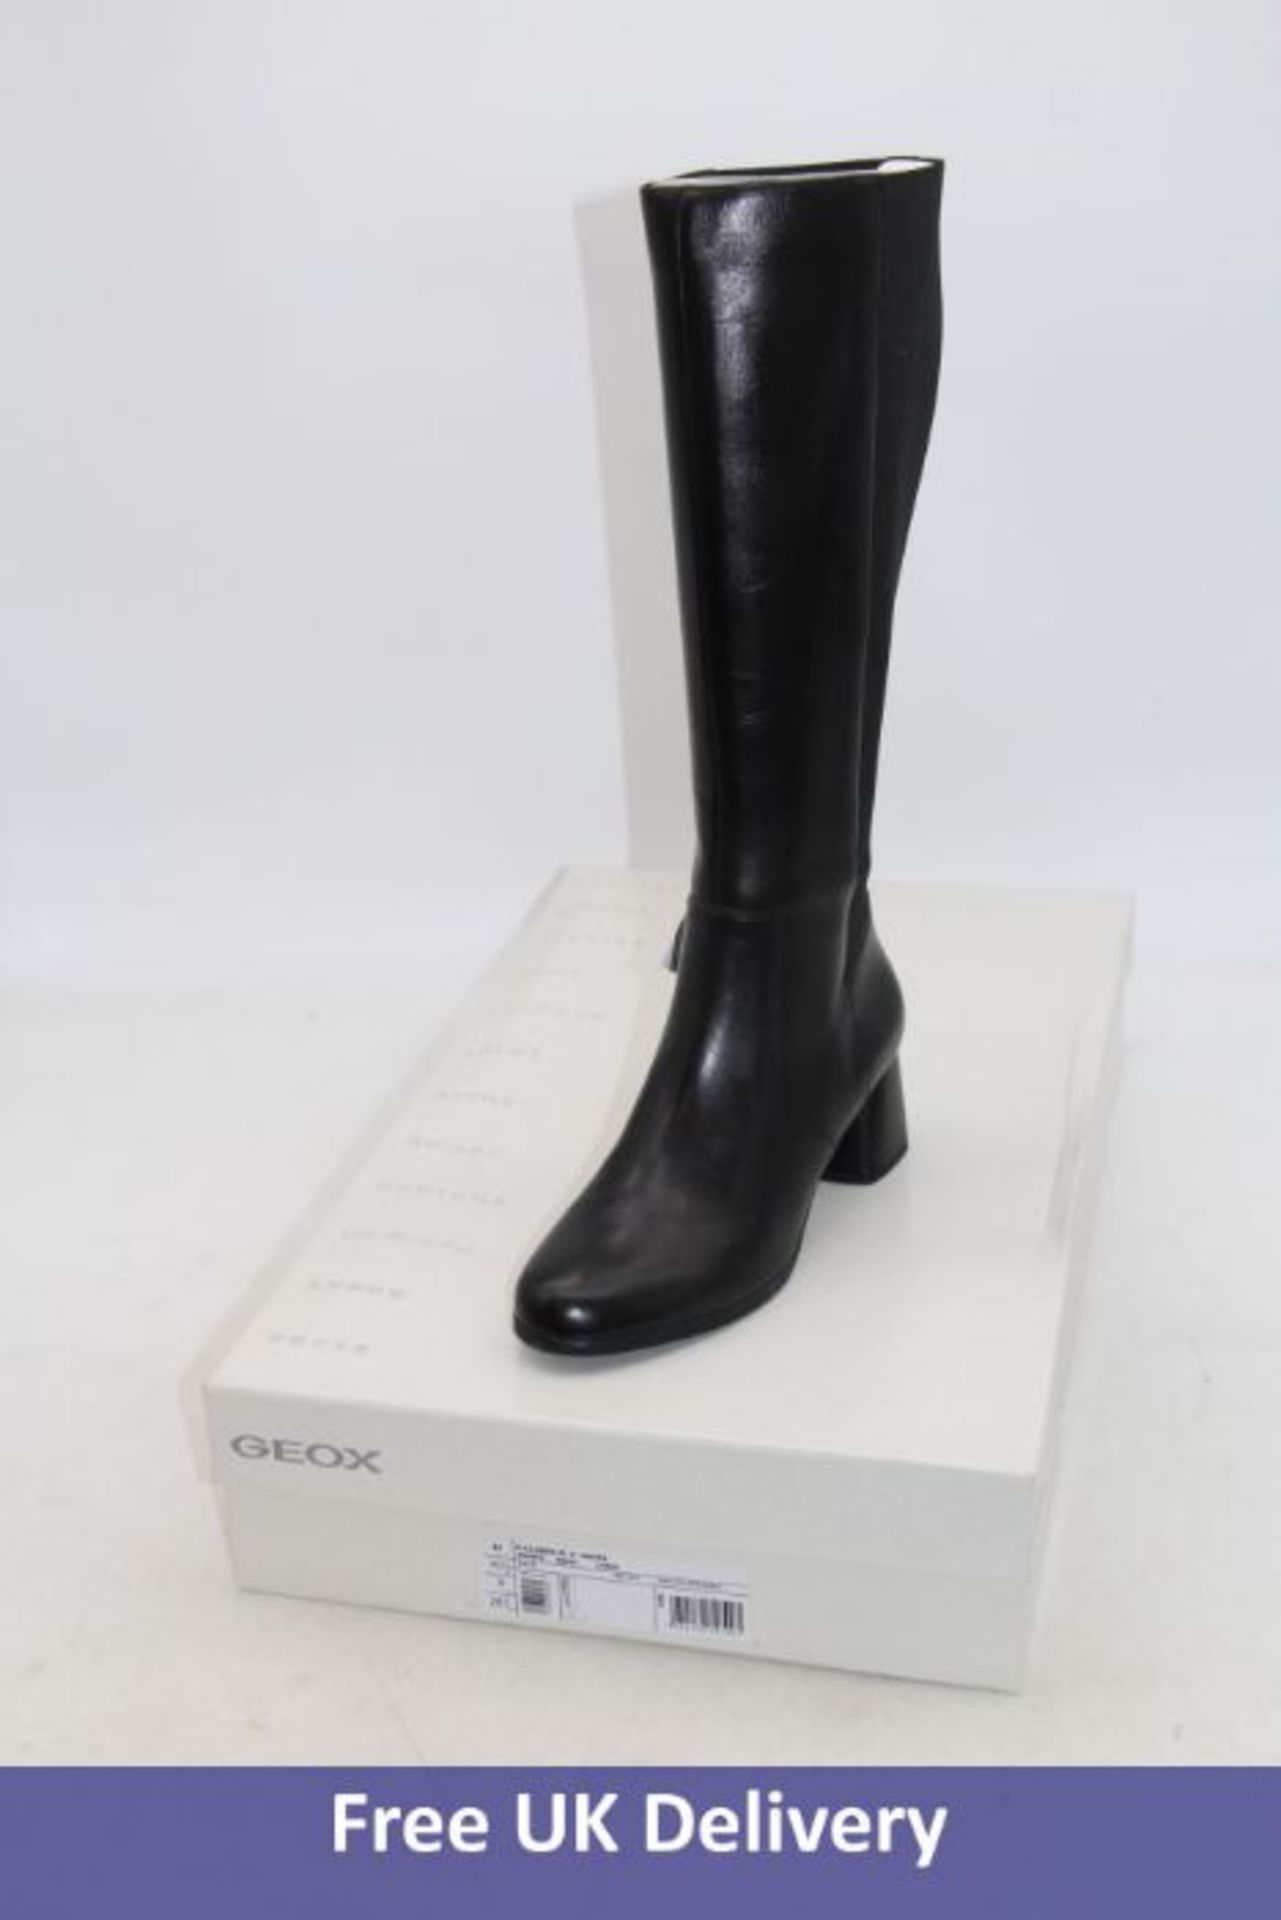 Two Geox Women's D Calinda Mid D Knee High Boots, Black, UK 8. Box damaged